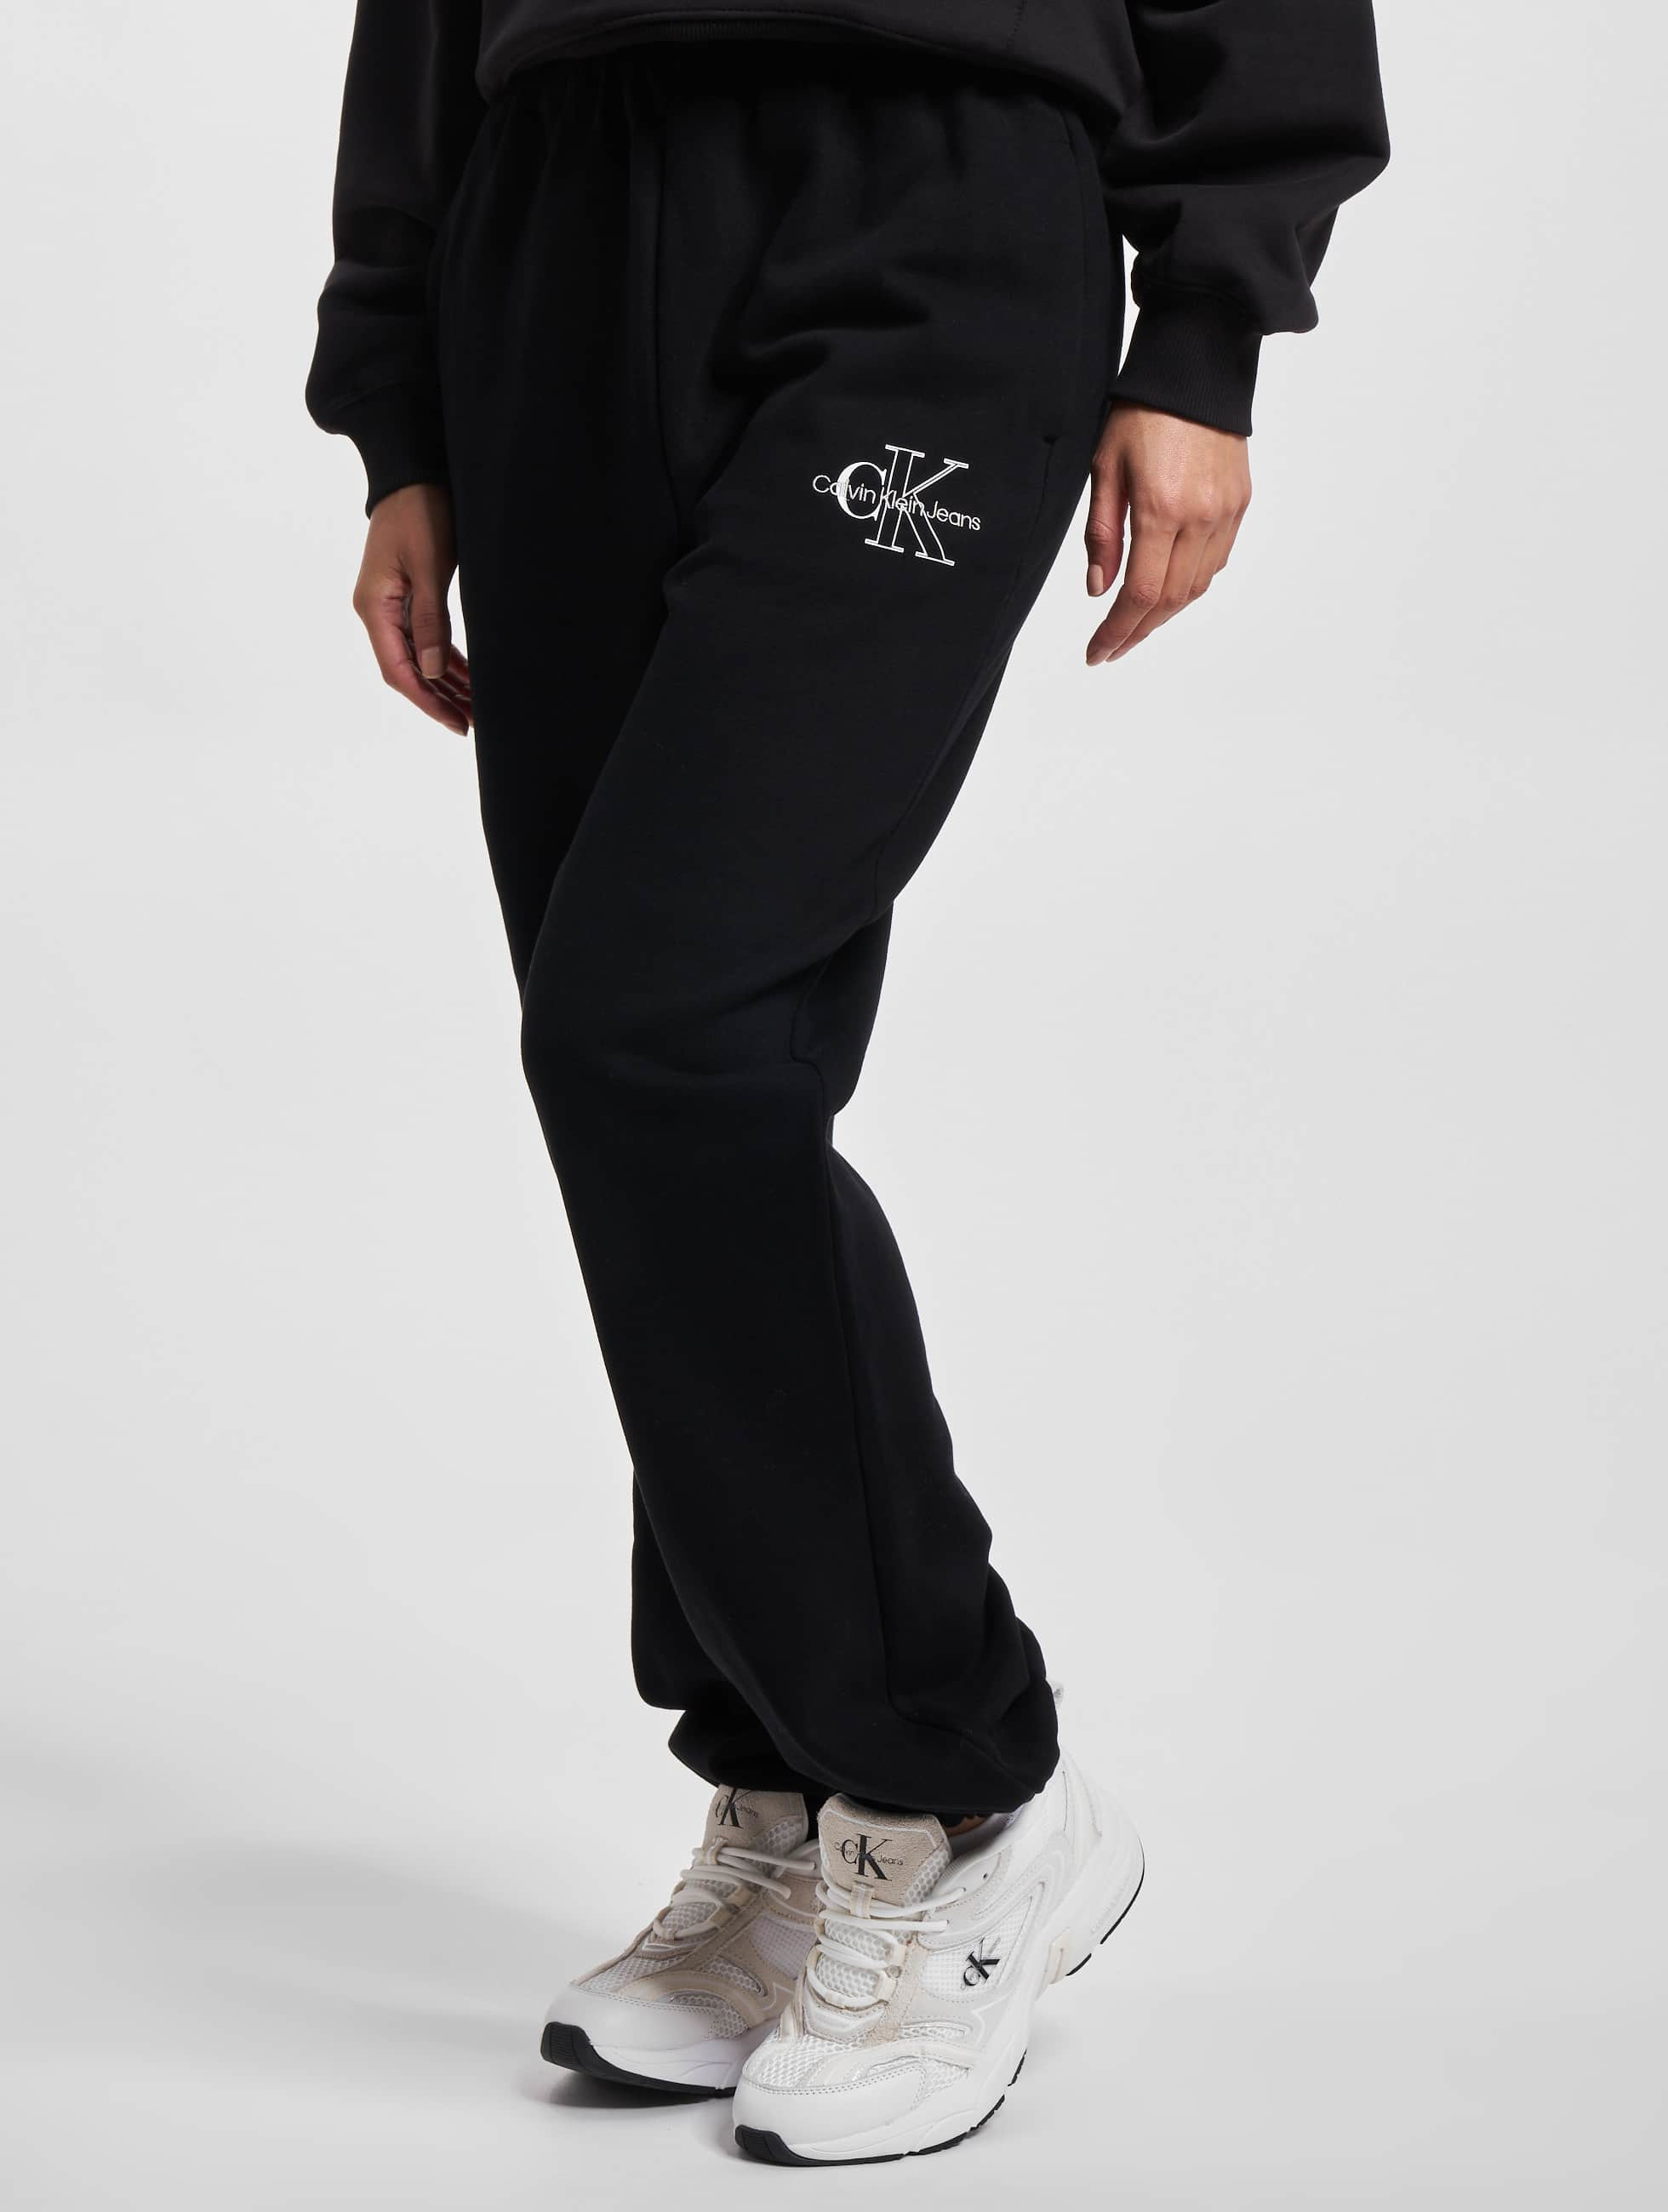 Mos Beide Onderbreking Calvin Klein broek / joggingbroek Two Tone Monogram in zwart 1031272